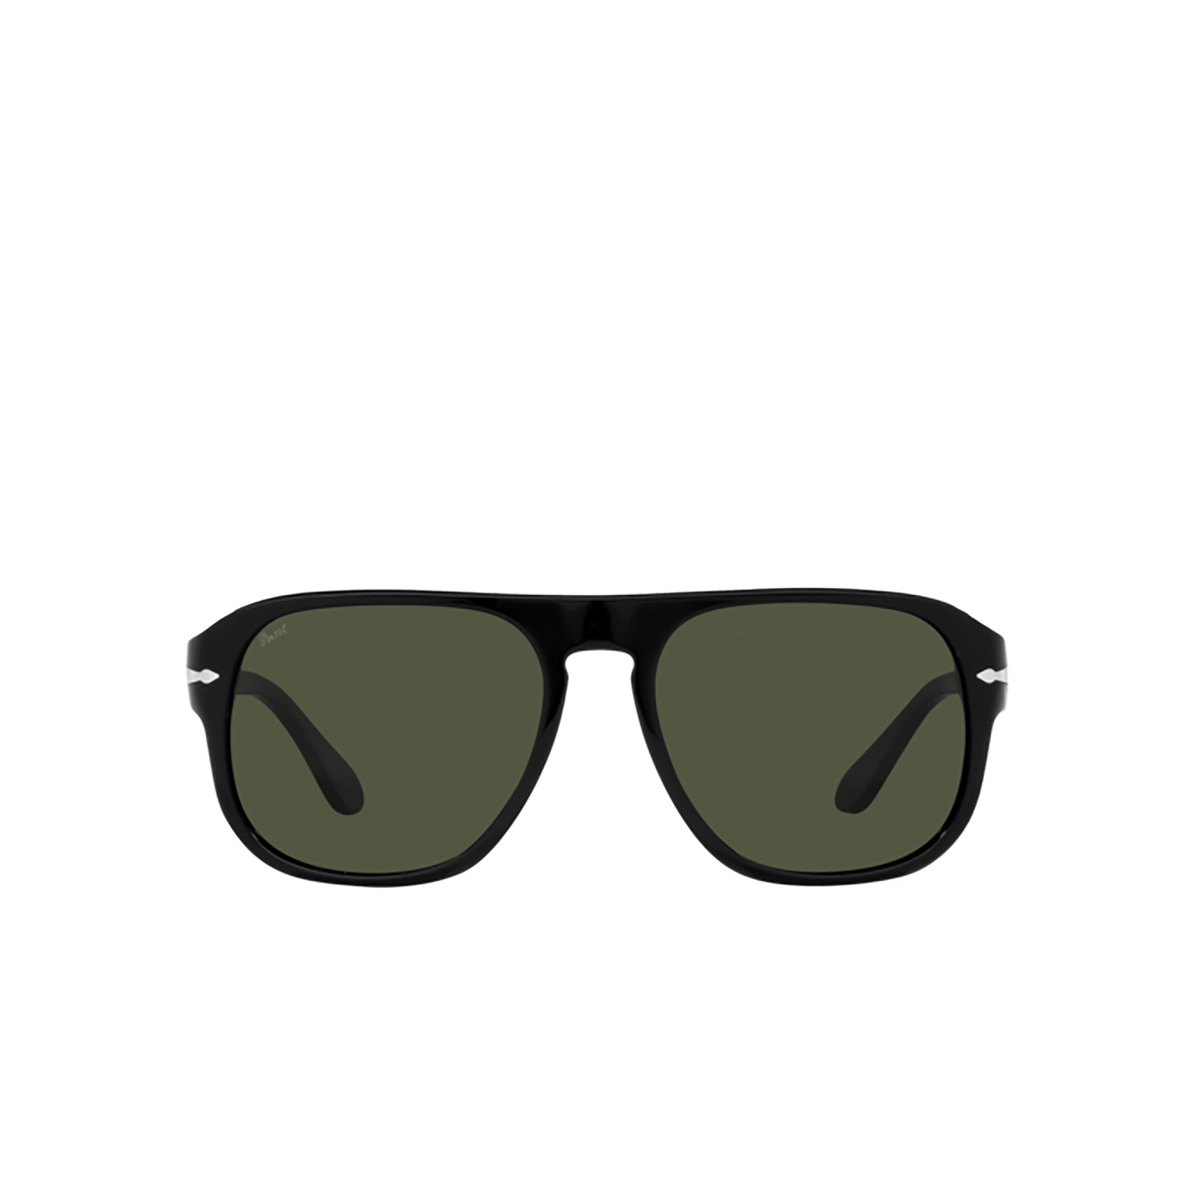 Persol JEAN Sunglasses 95/31 Black - front view